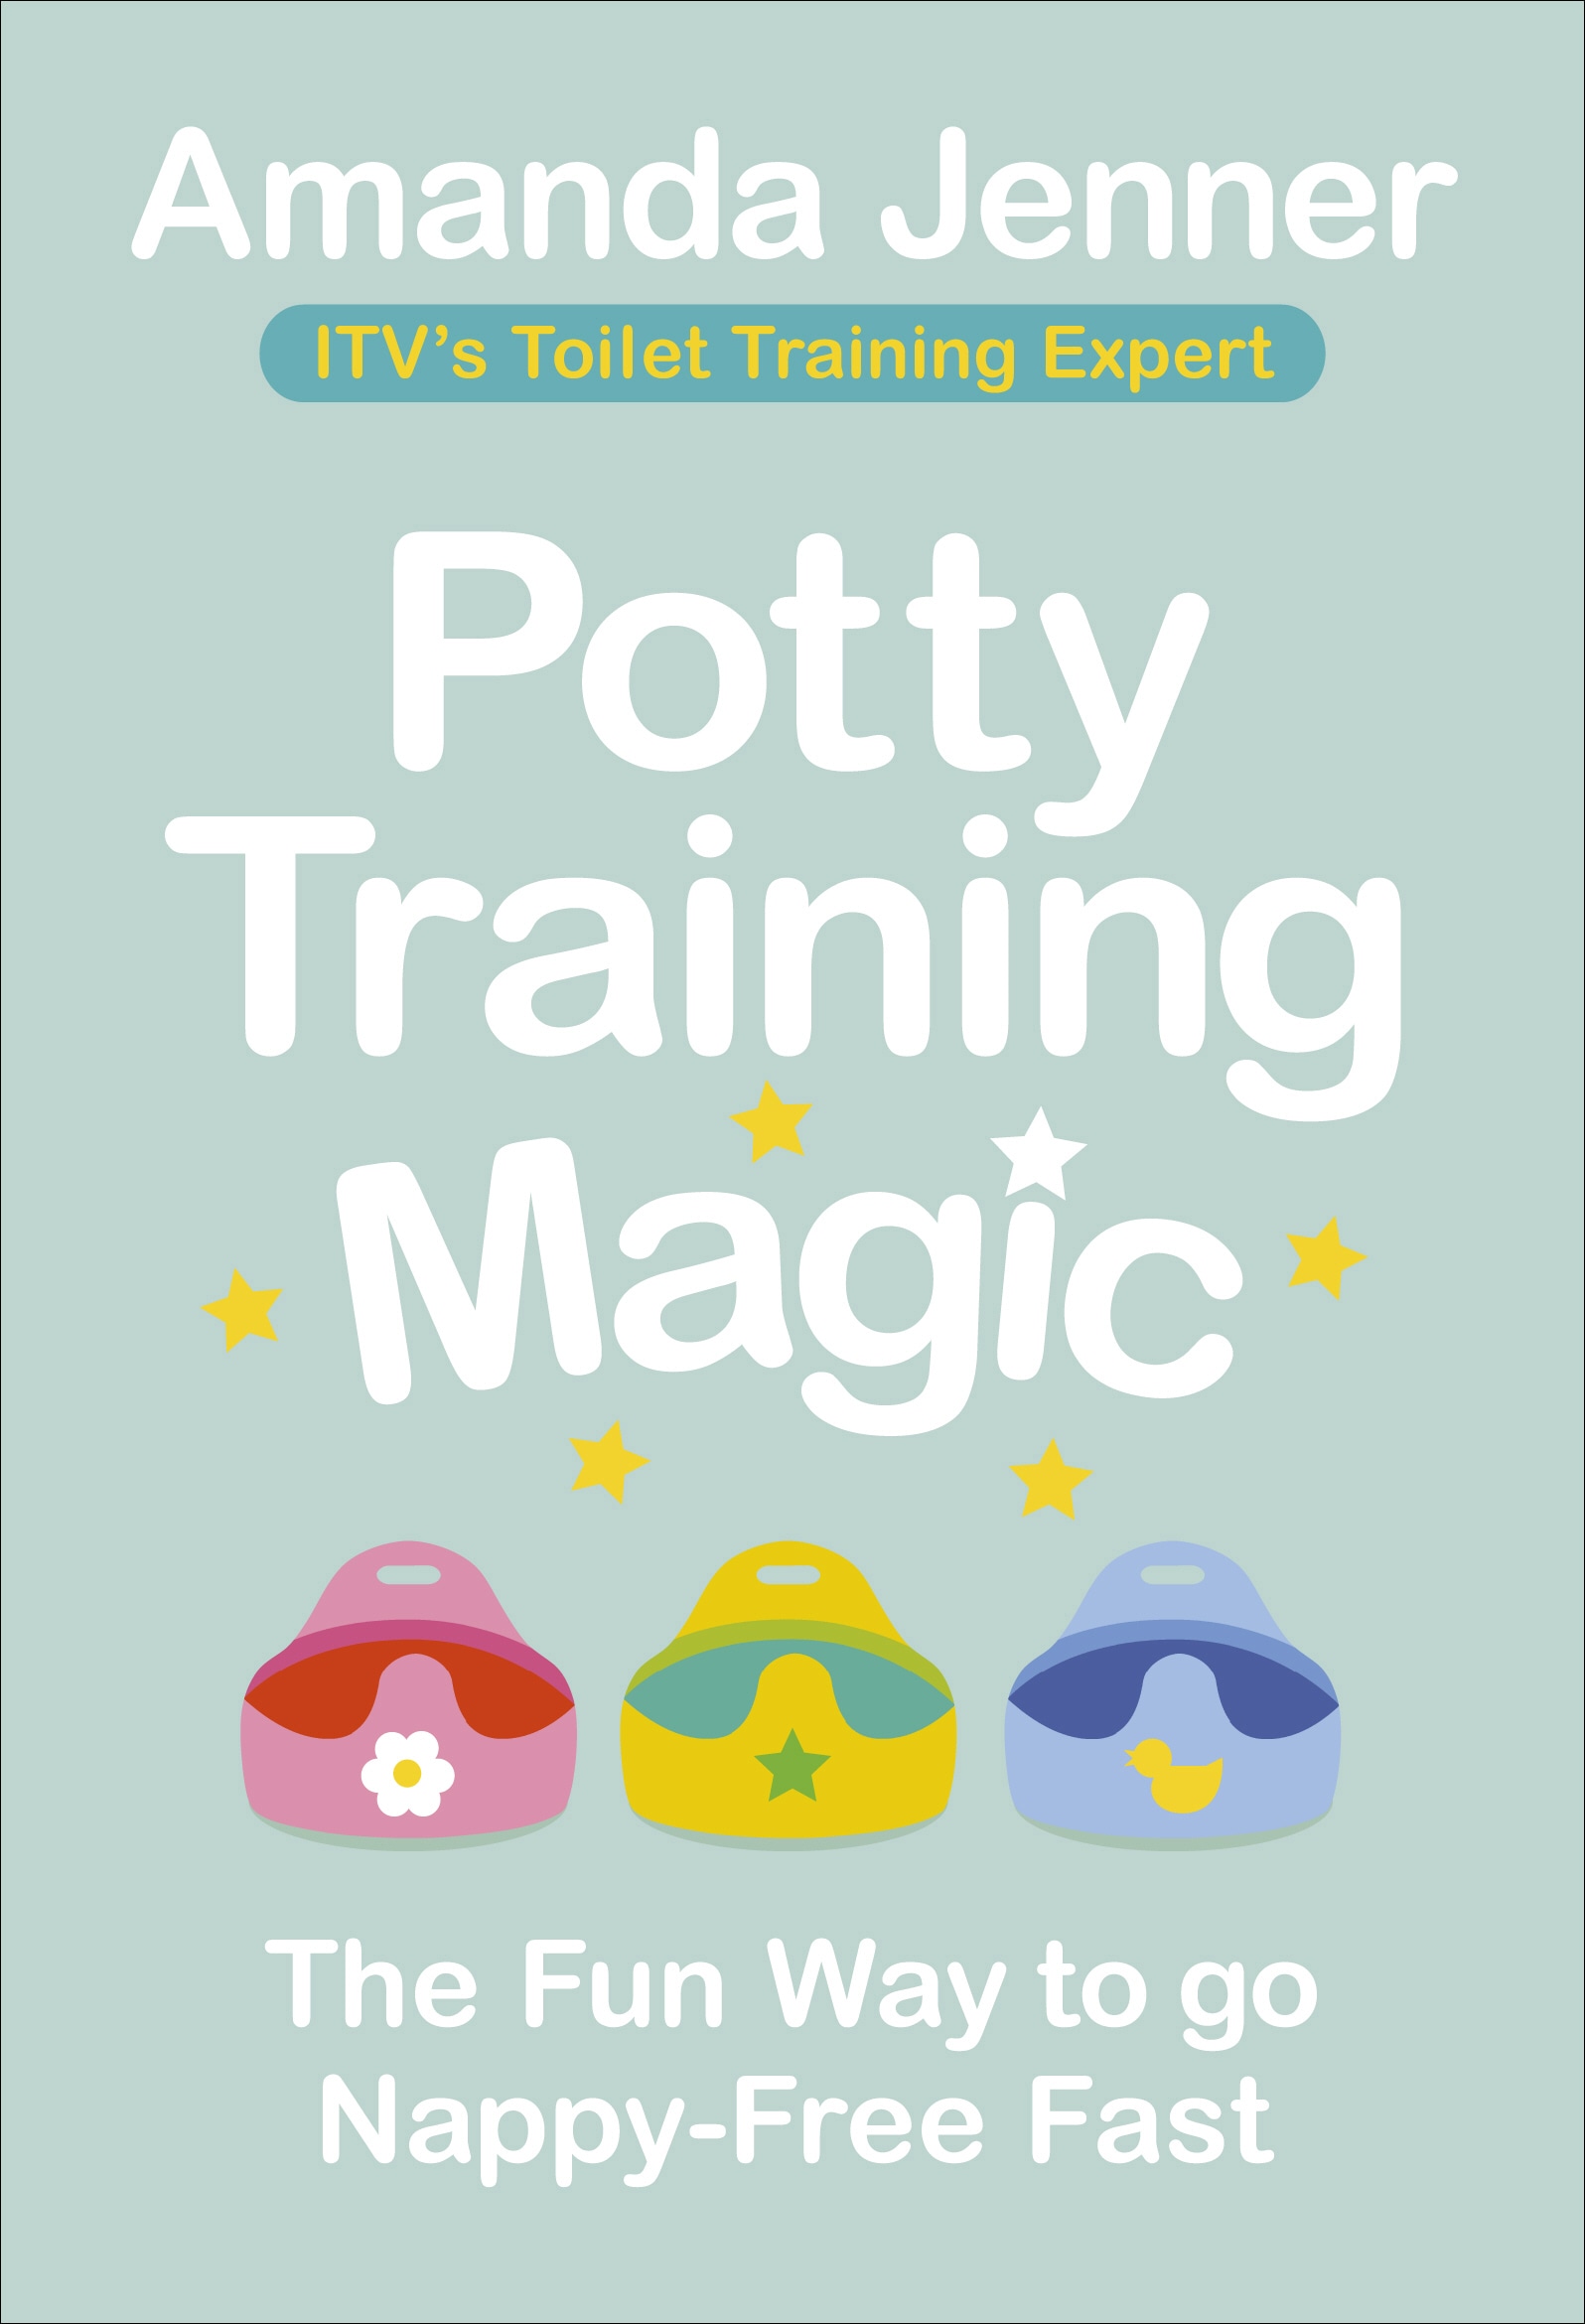 Book “Potty Training Magic” by Amanda Jenner — April 4, 2019